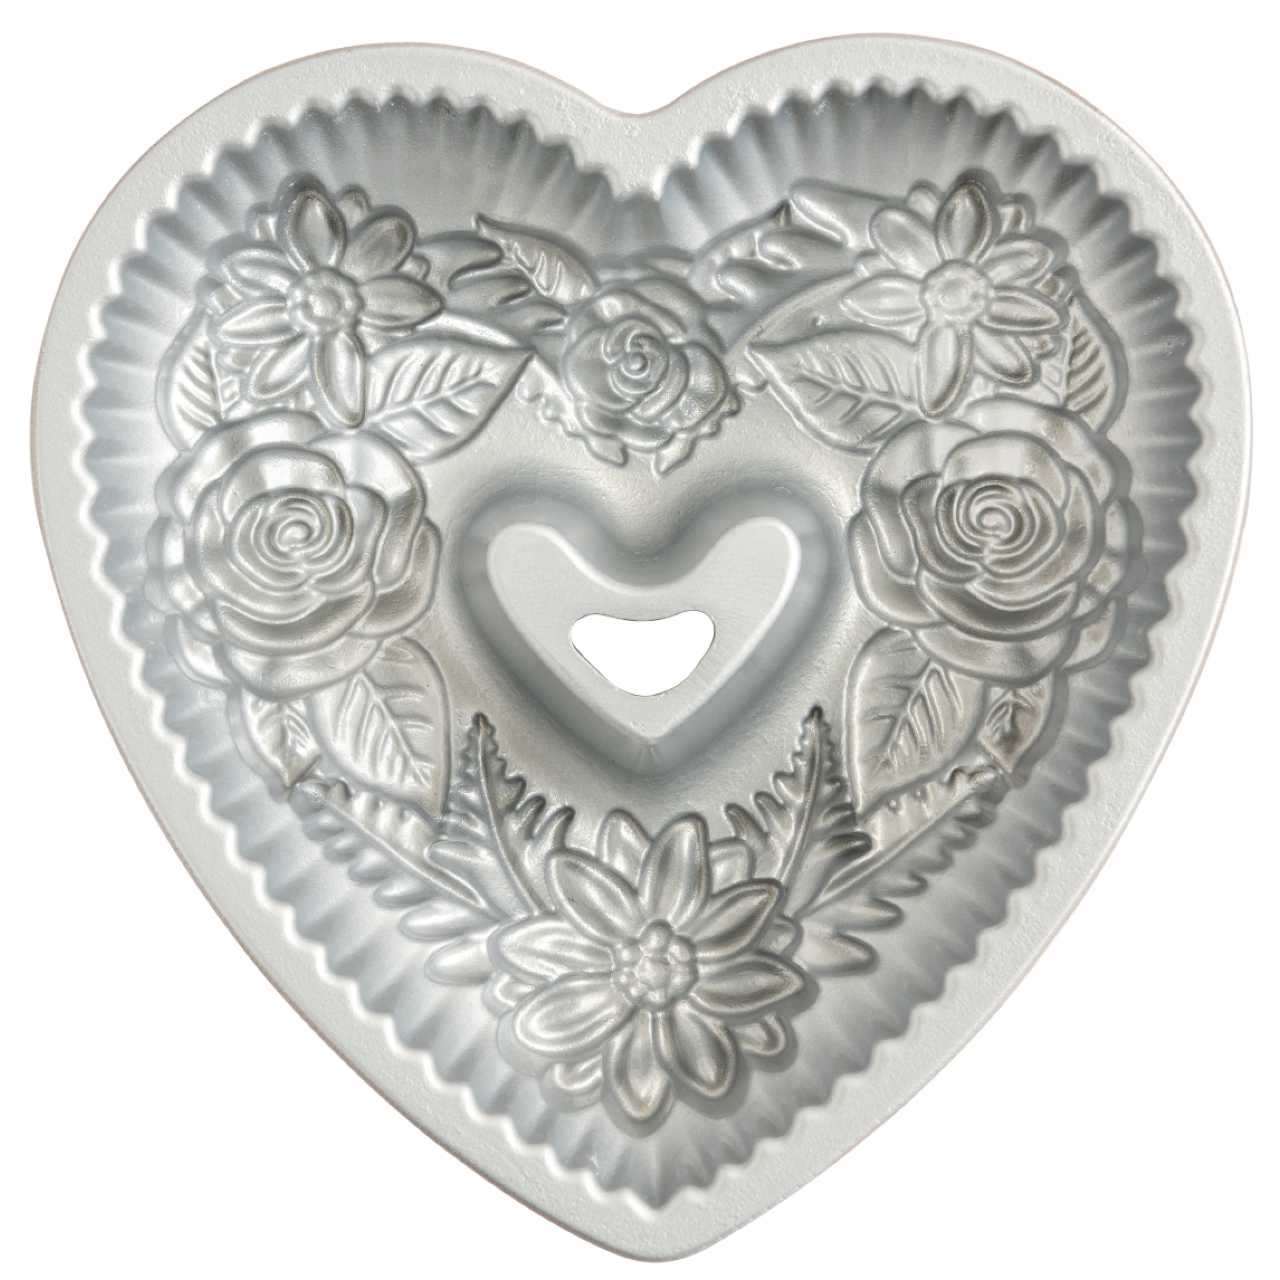 https://cdn11.bigcommerce.com/s-21kj3ntgv1/images/stencil/1280x1280/products/690/3202/Nordic-Ware-Floral-Heart-Bundt-Pan-inside-view__23382.1700355627.jpg?c=2